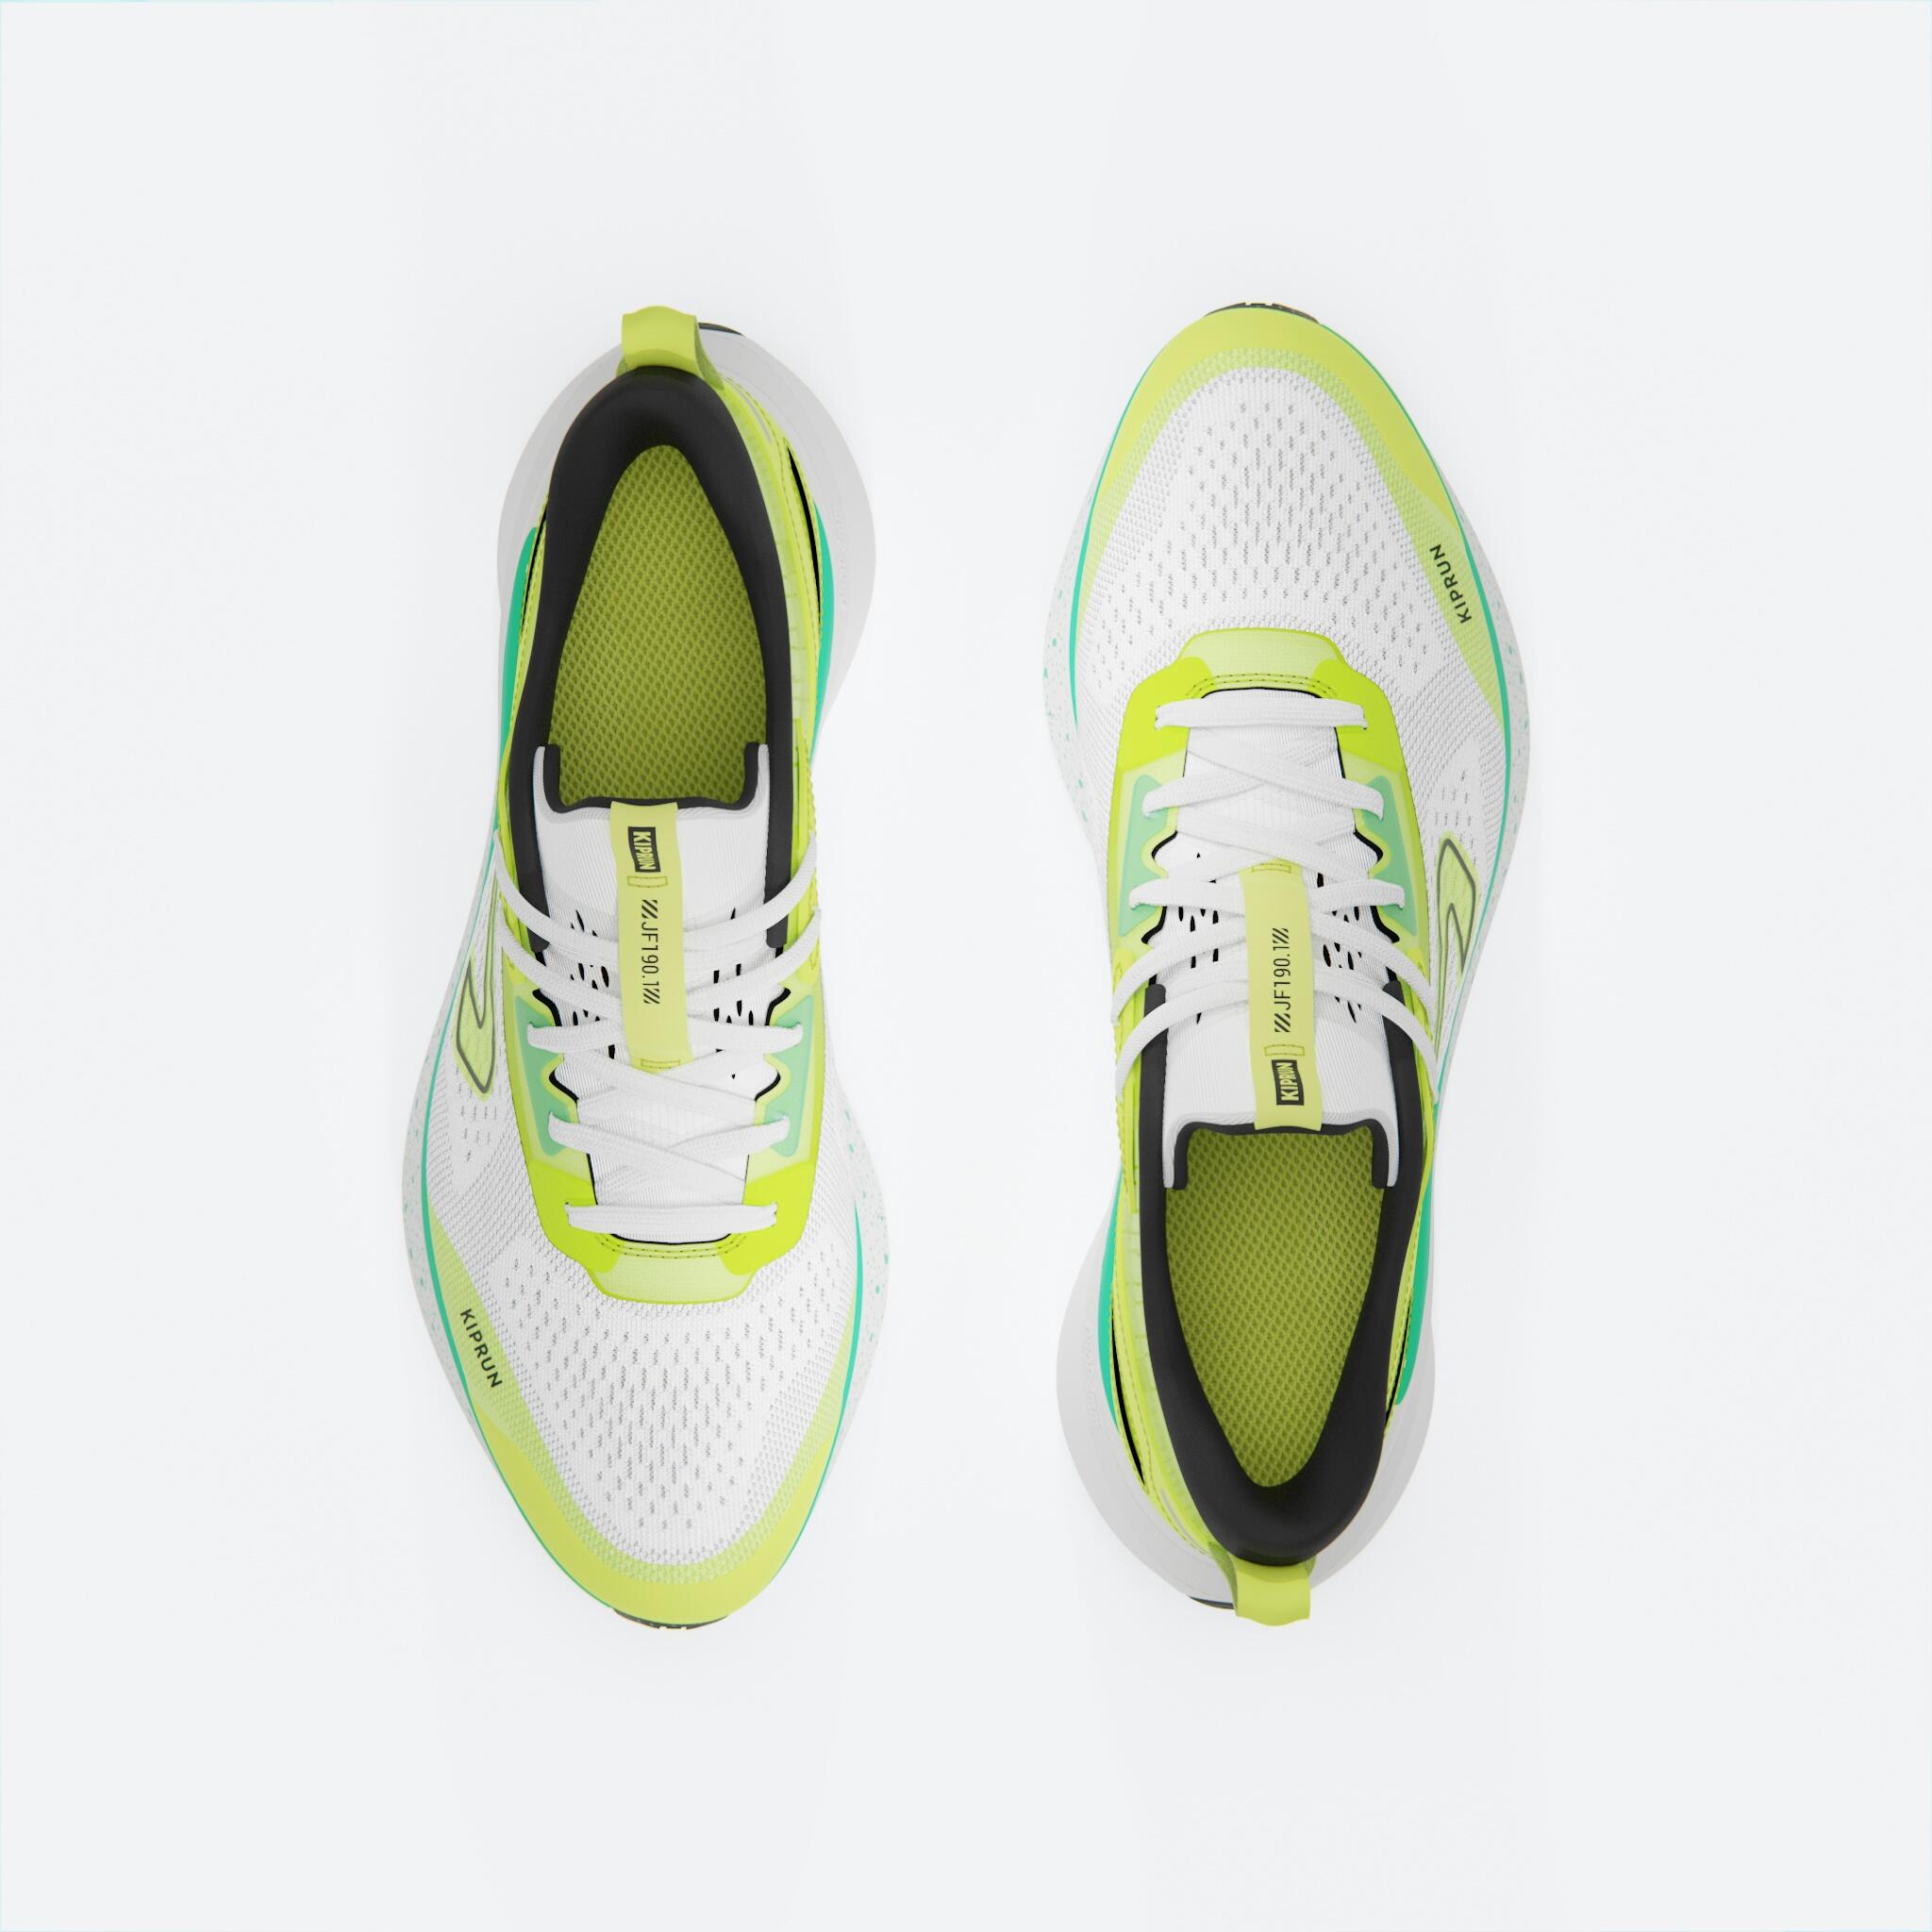 MEN'S JOGFLOW 190.1 Running Shoes - White/Yellow 6/7